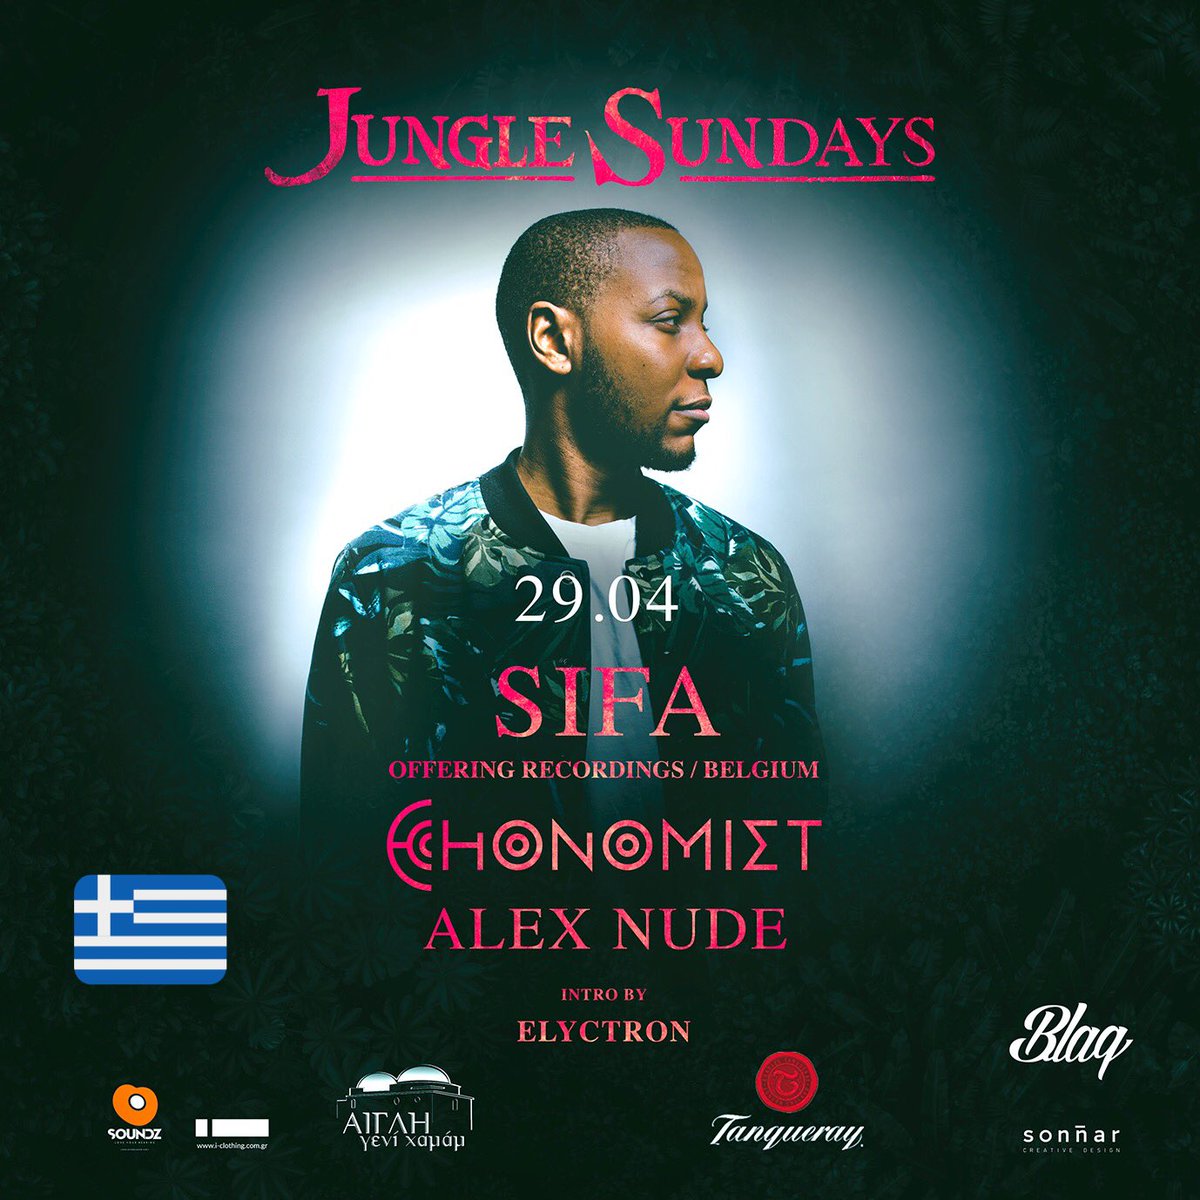 This Sunday I’ll make my Greek debut, at #Aiglighenhamam w/ @EchonomistMusic and @alexnude! #thessaloniki #deephouse #sifaishere #afrohouse